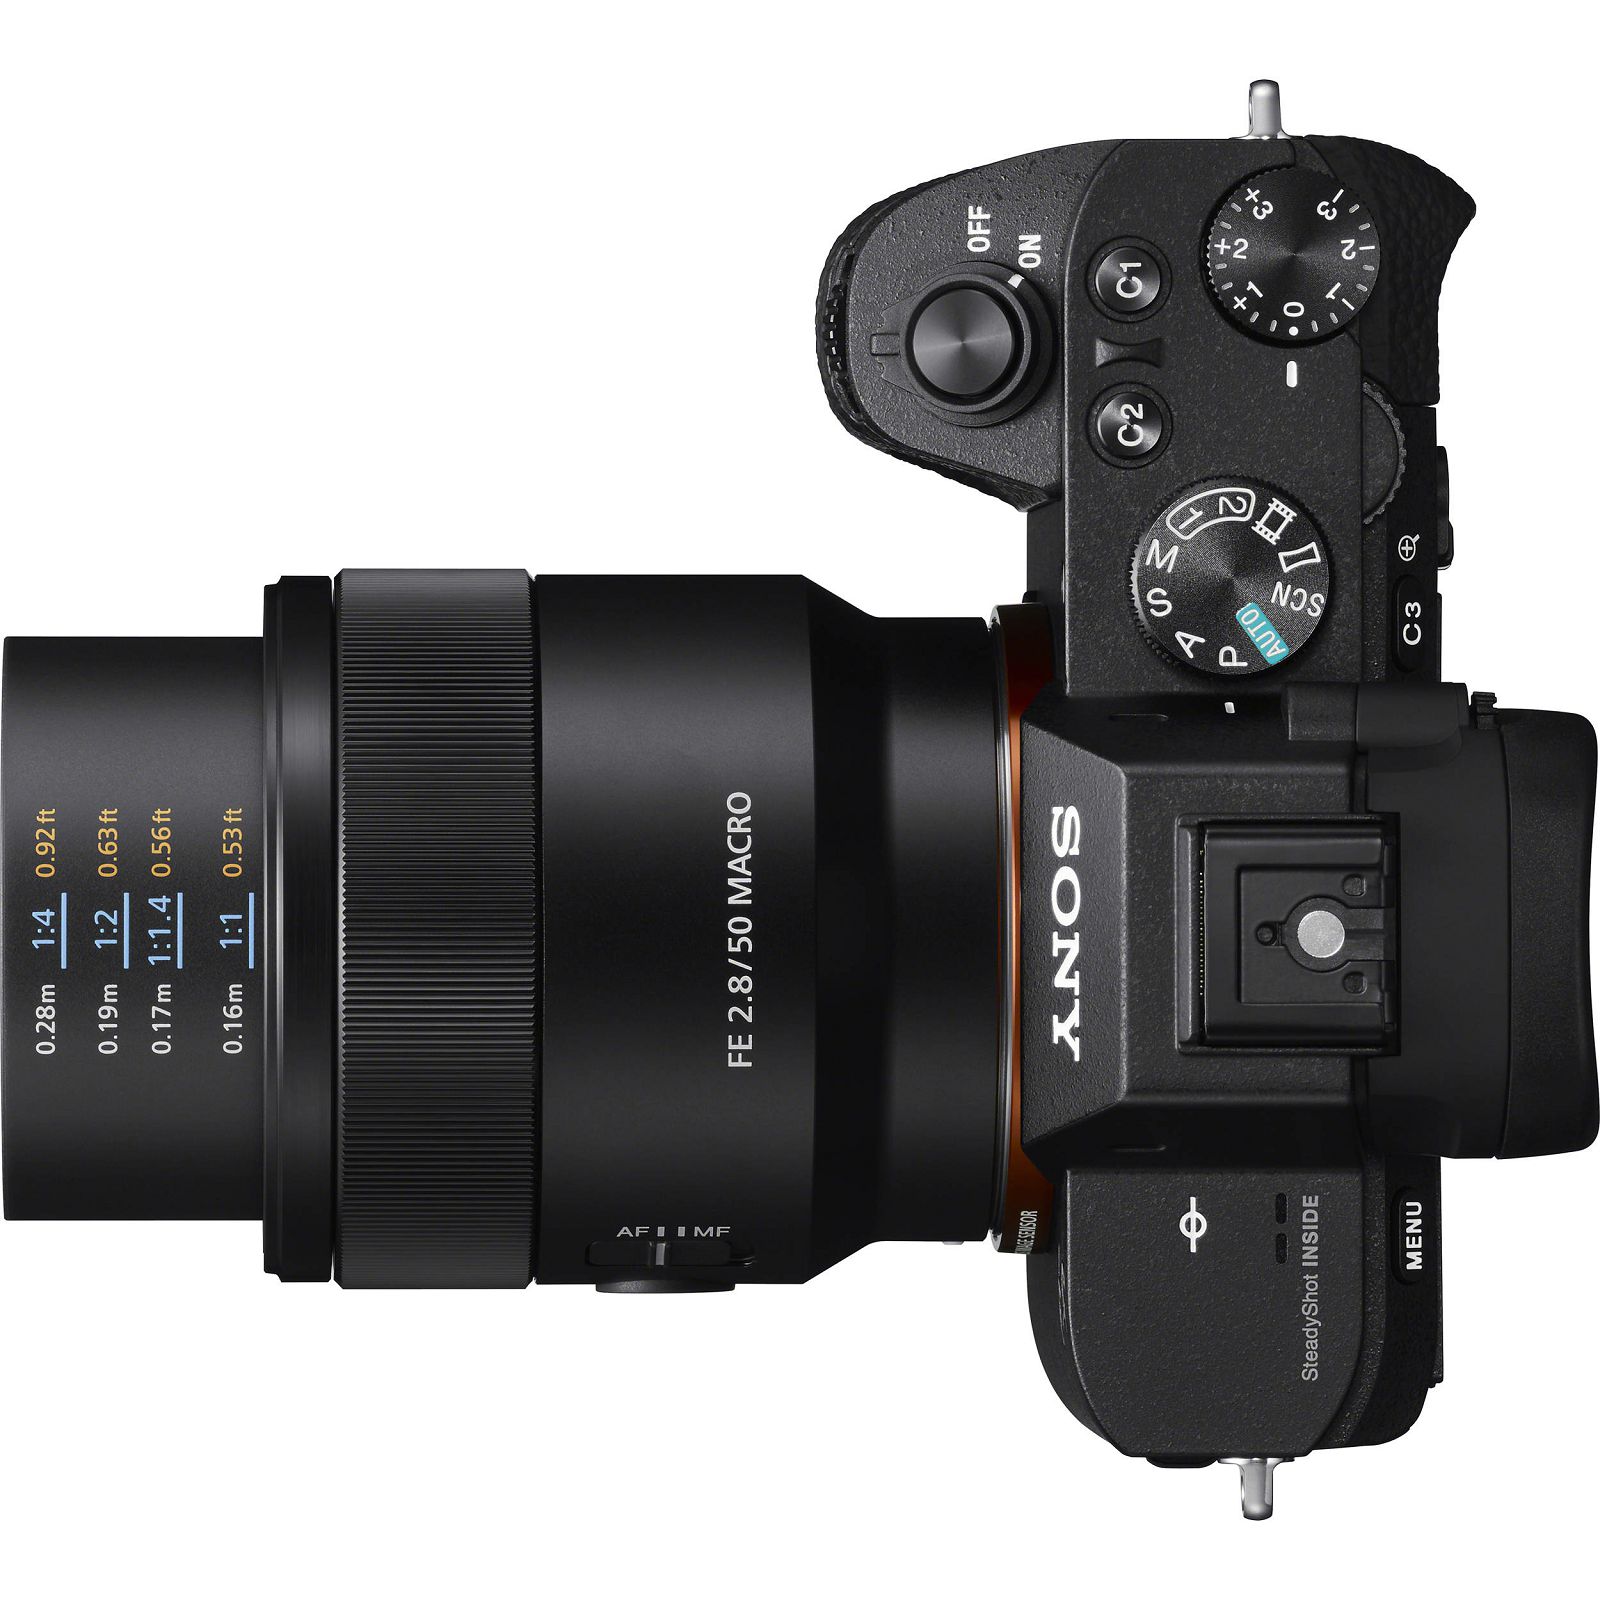 Sony FE 50mm f/2.8 Macro 1:1 standardni objektiv za E-Mount 50 F2.8 2.8 f/2,8 SEL-50M28 SEL50M28 (SEL50M28.SYX)